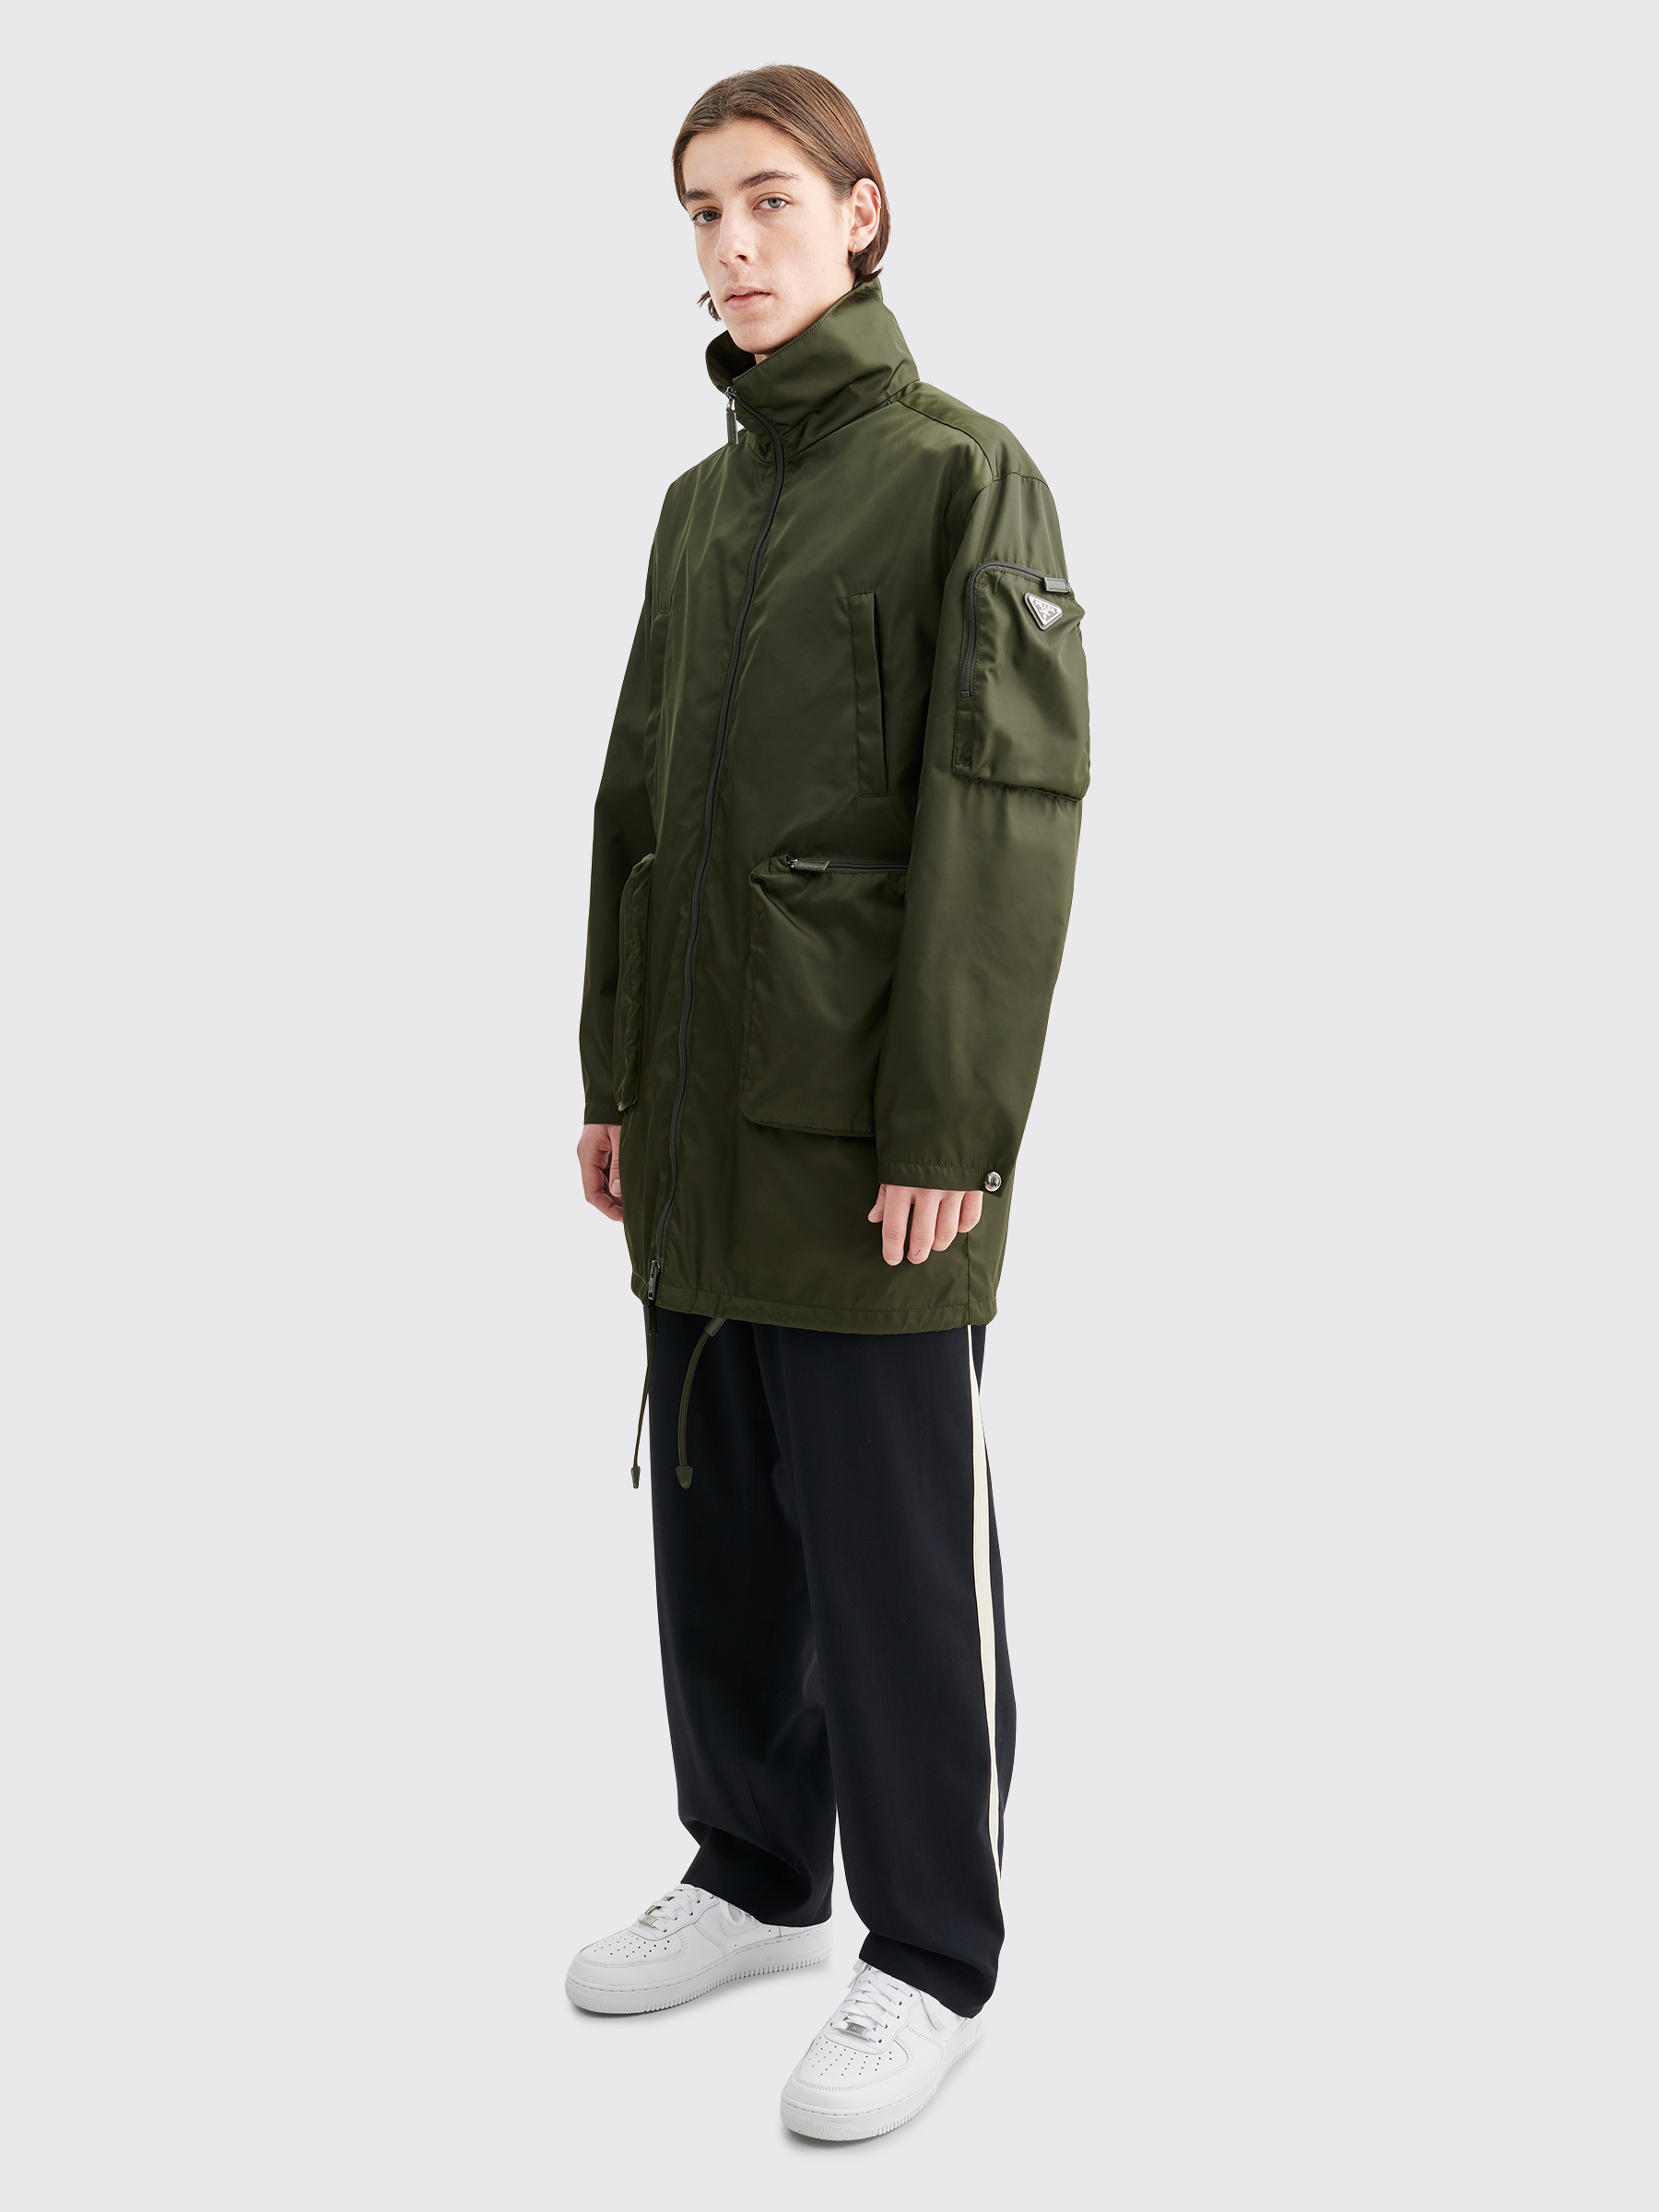 prada military jacket